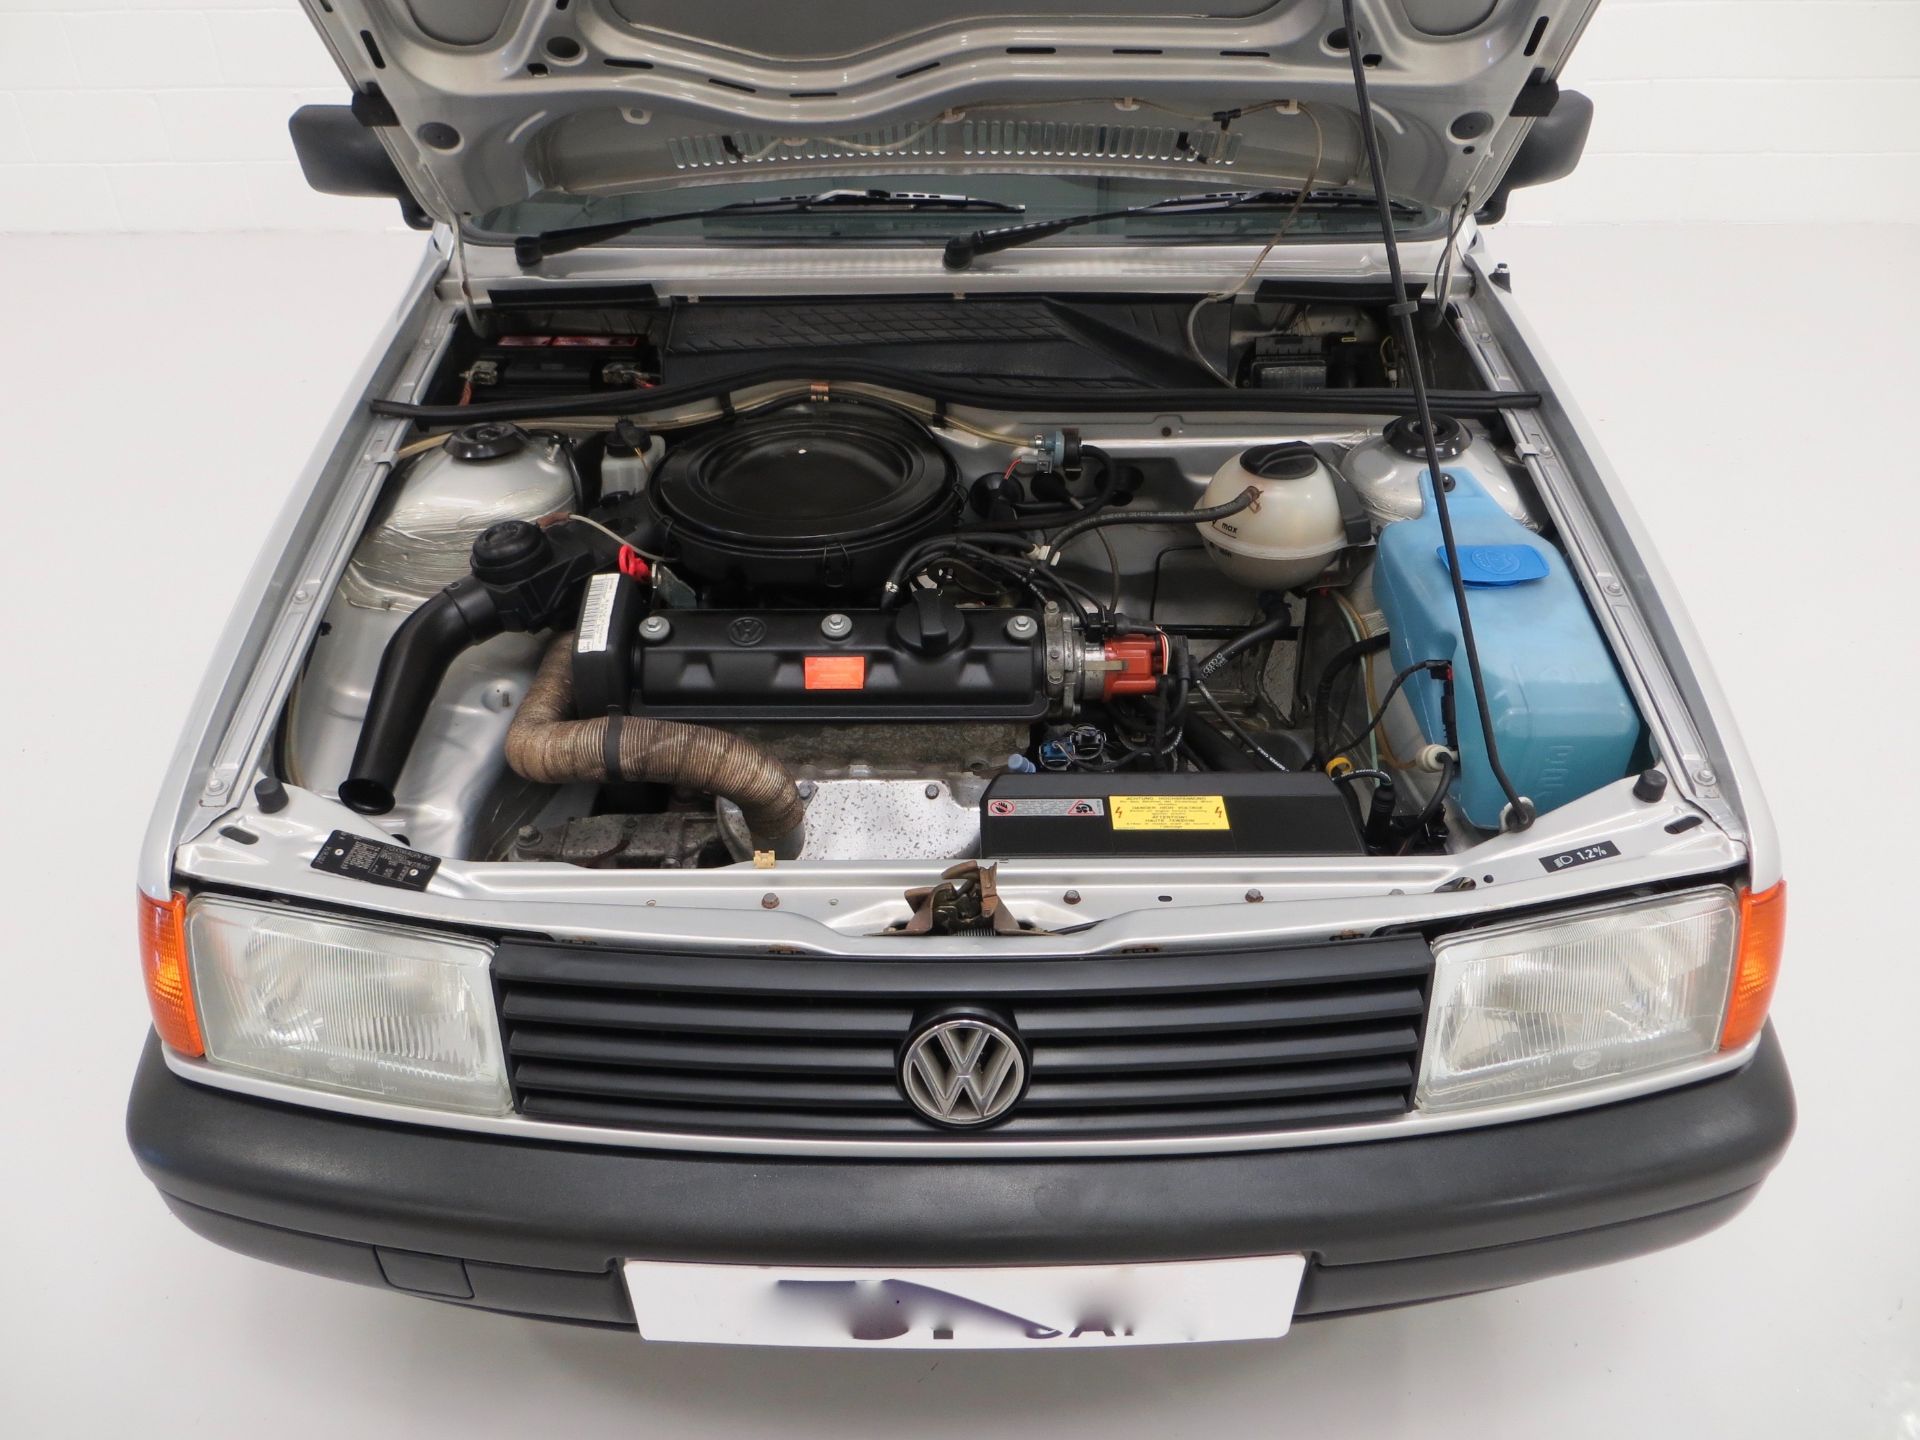 1992 Volkswagen Polo Mk2F Genesis - Image 76 of 86